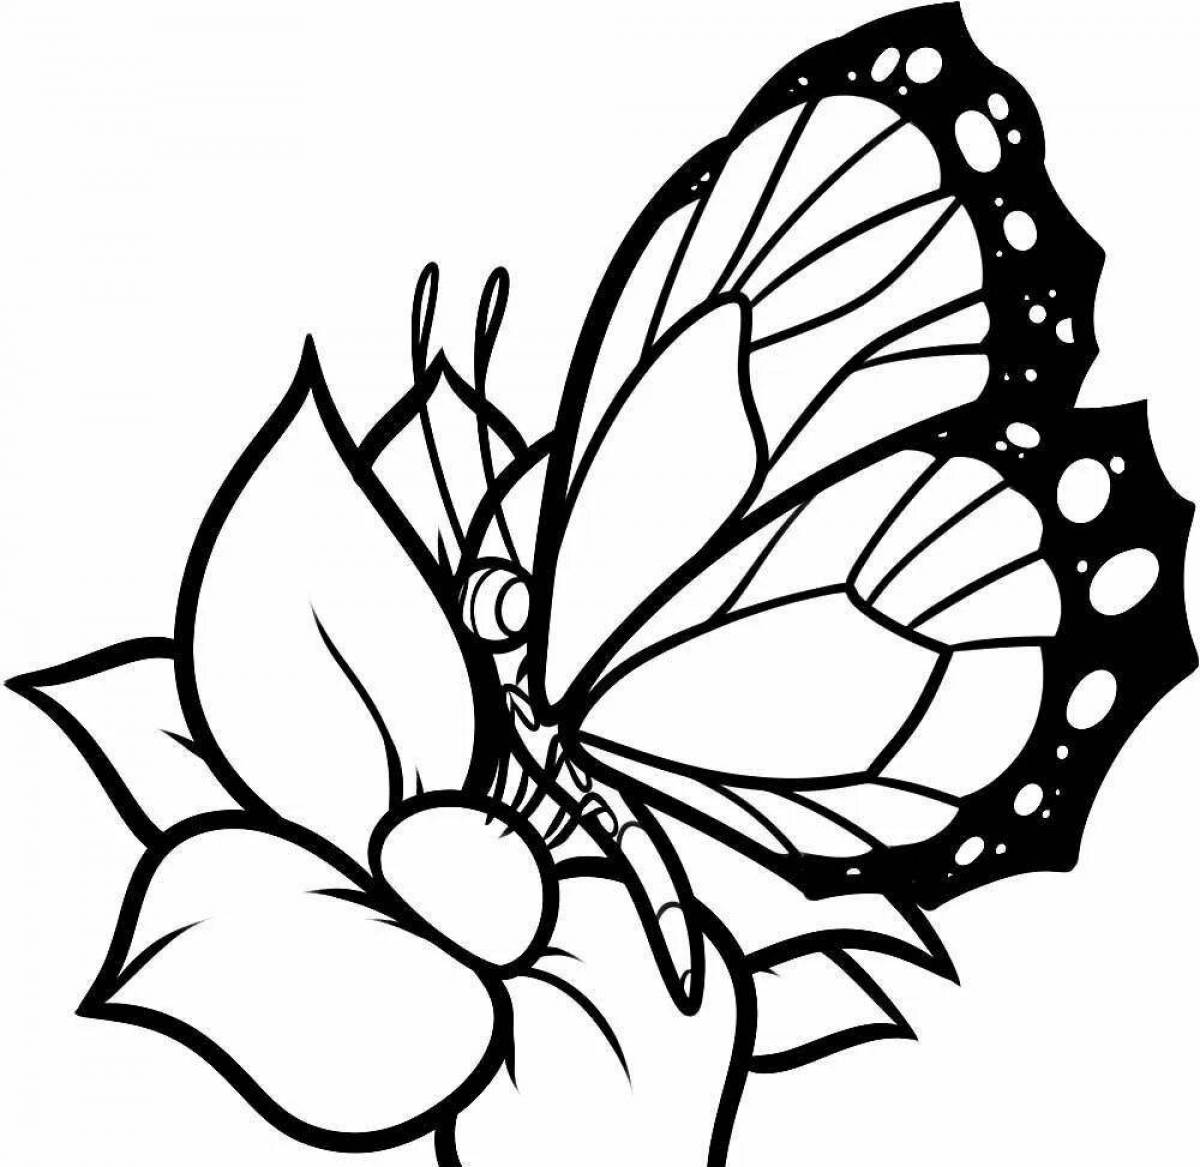 A graceful butterfly on a fragrant flower